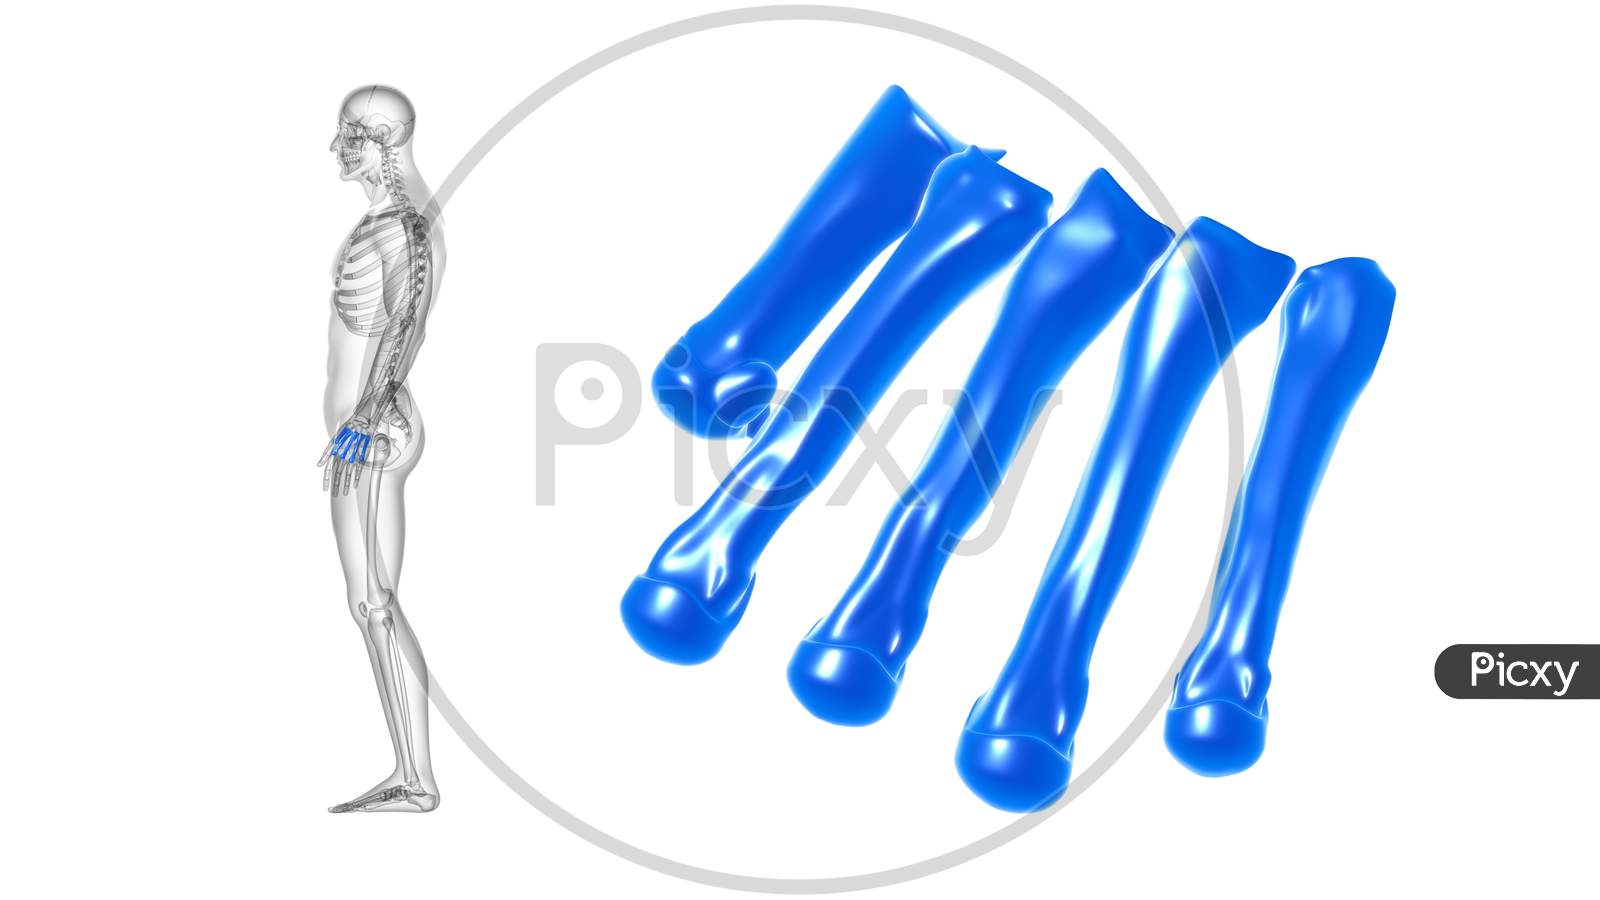 Human Skeleton Hand Phalanges Bone Anatomy For Medical Concept